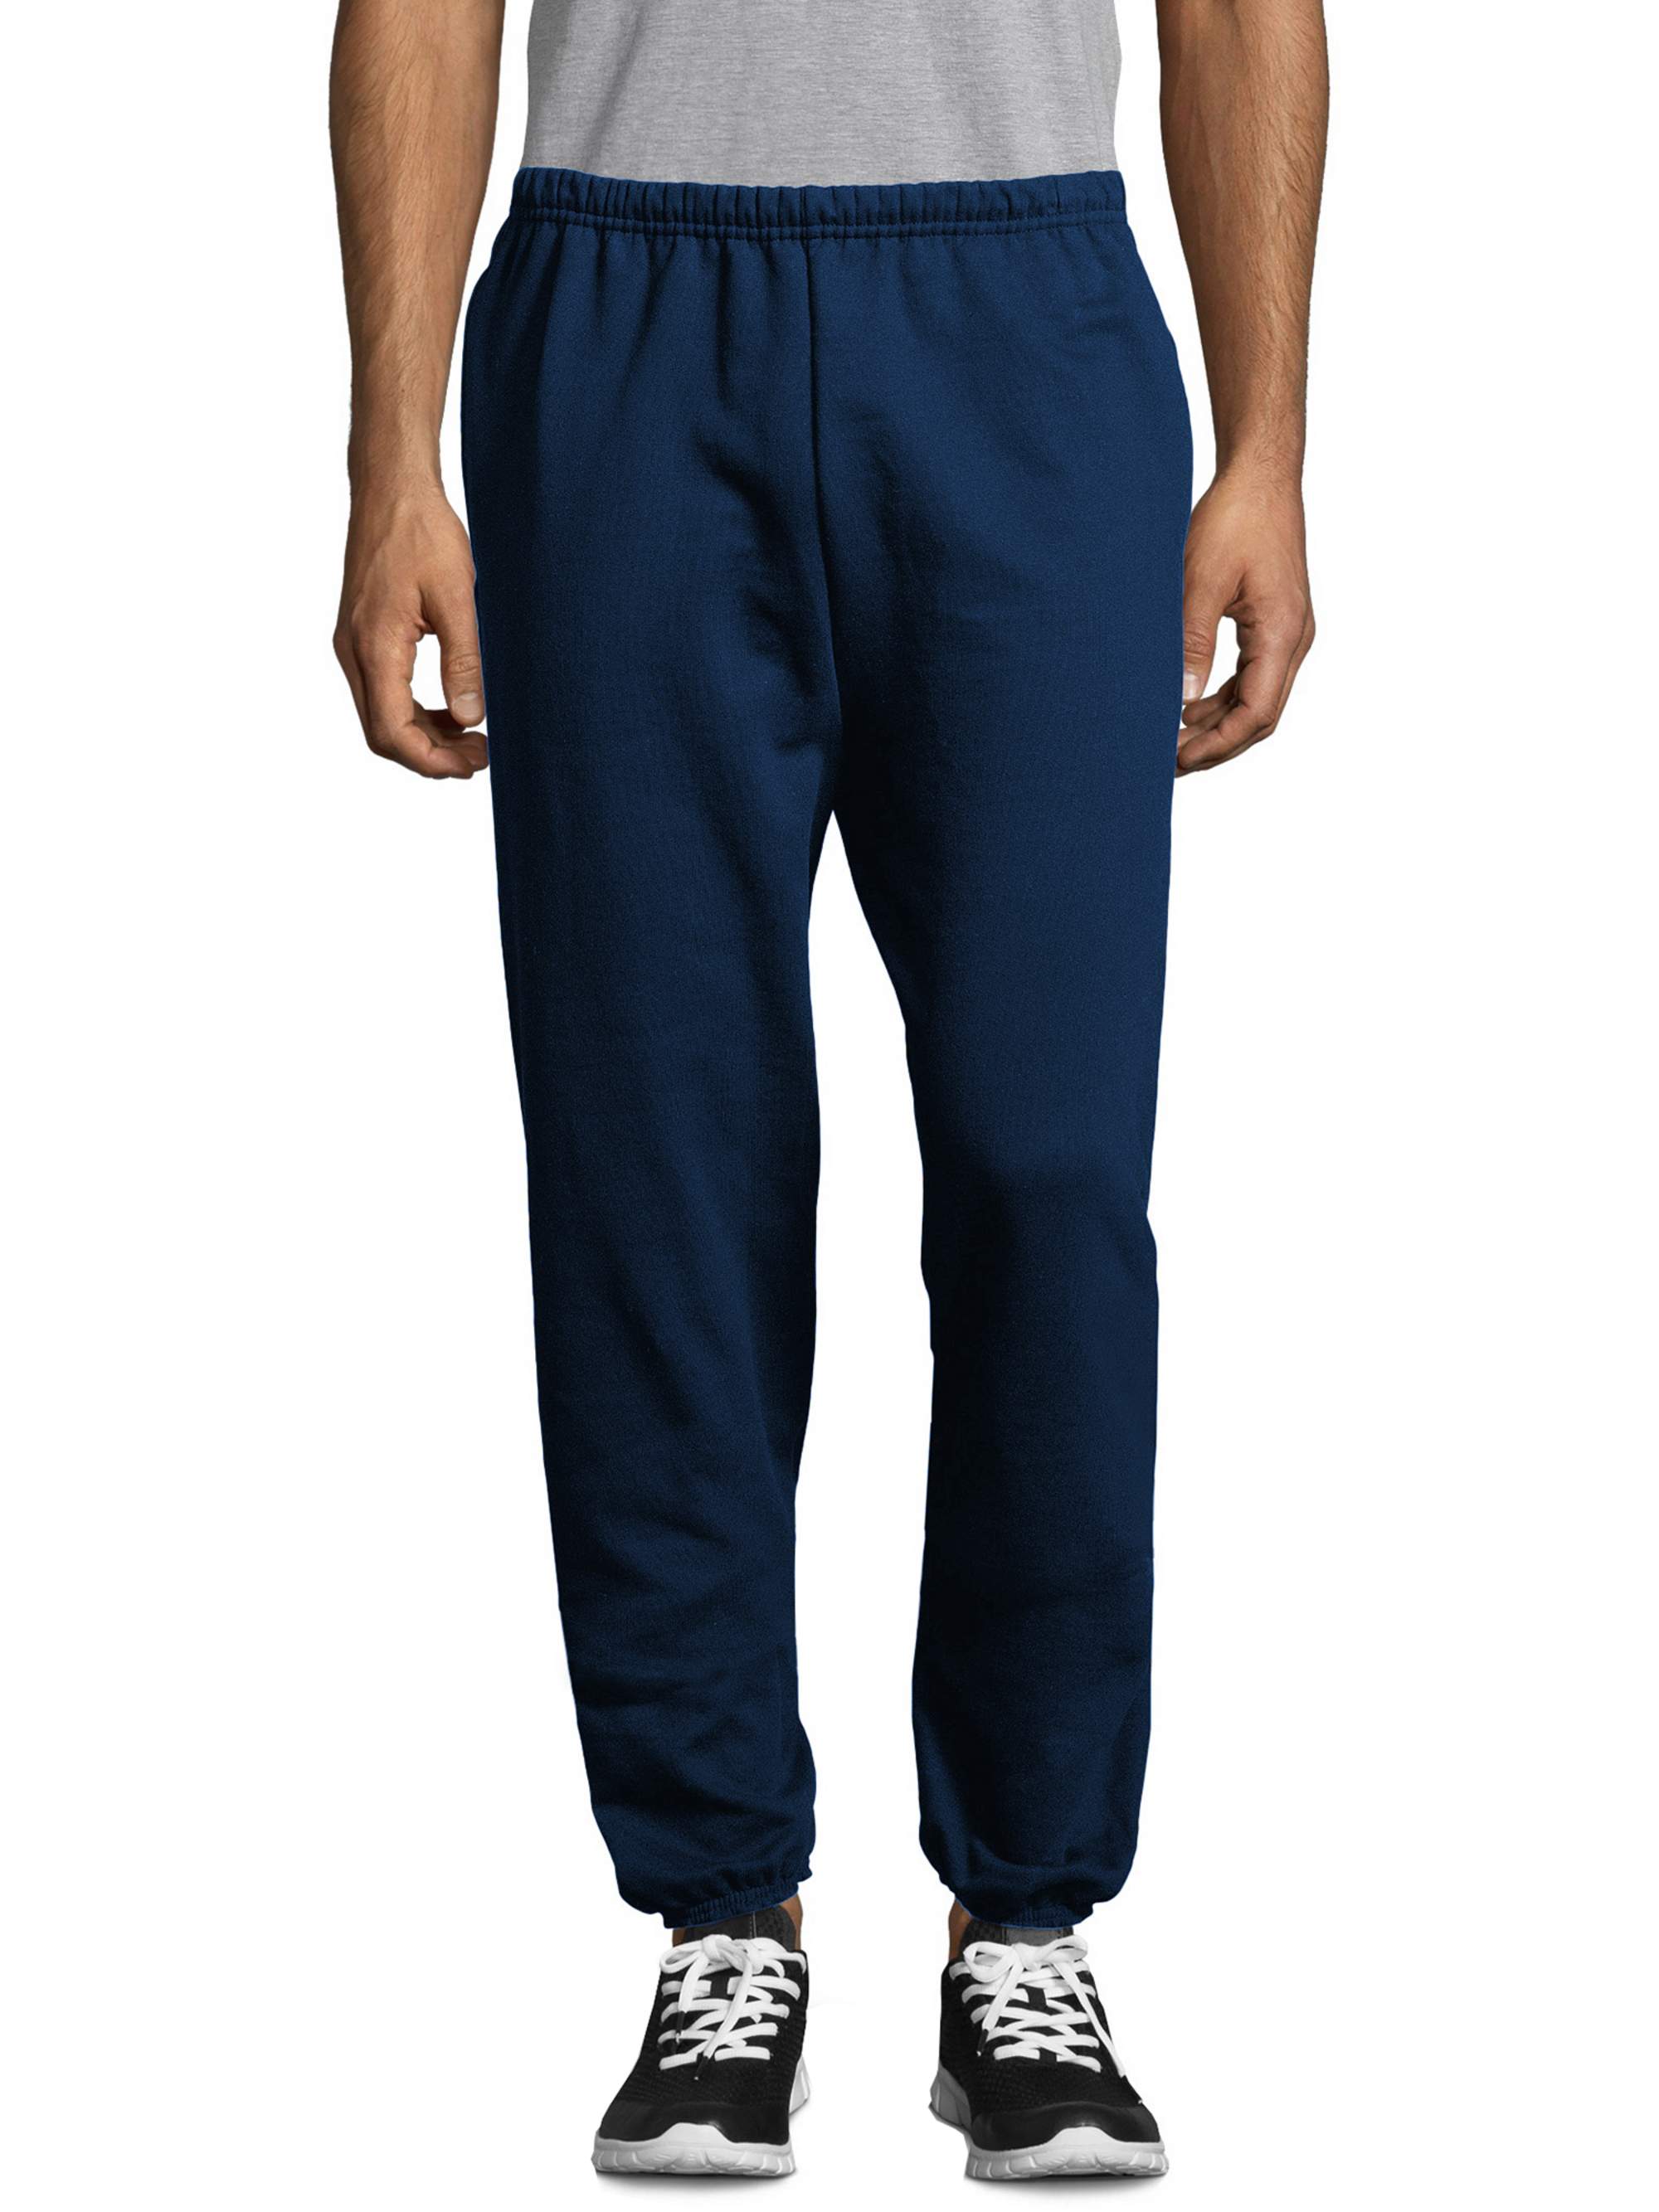 Hanes Sport Men's and Big Men's Ultimate Fleece Sweatpants with Pockets, Sizes S-3XL - image 1 of 5